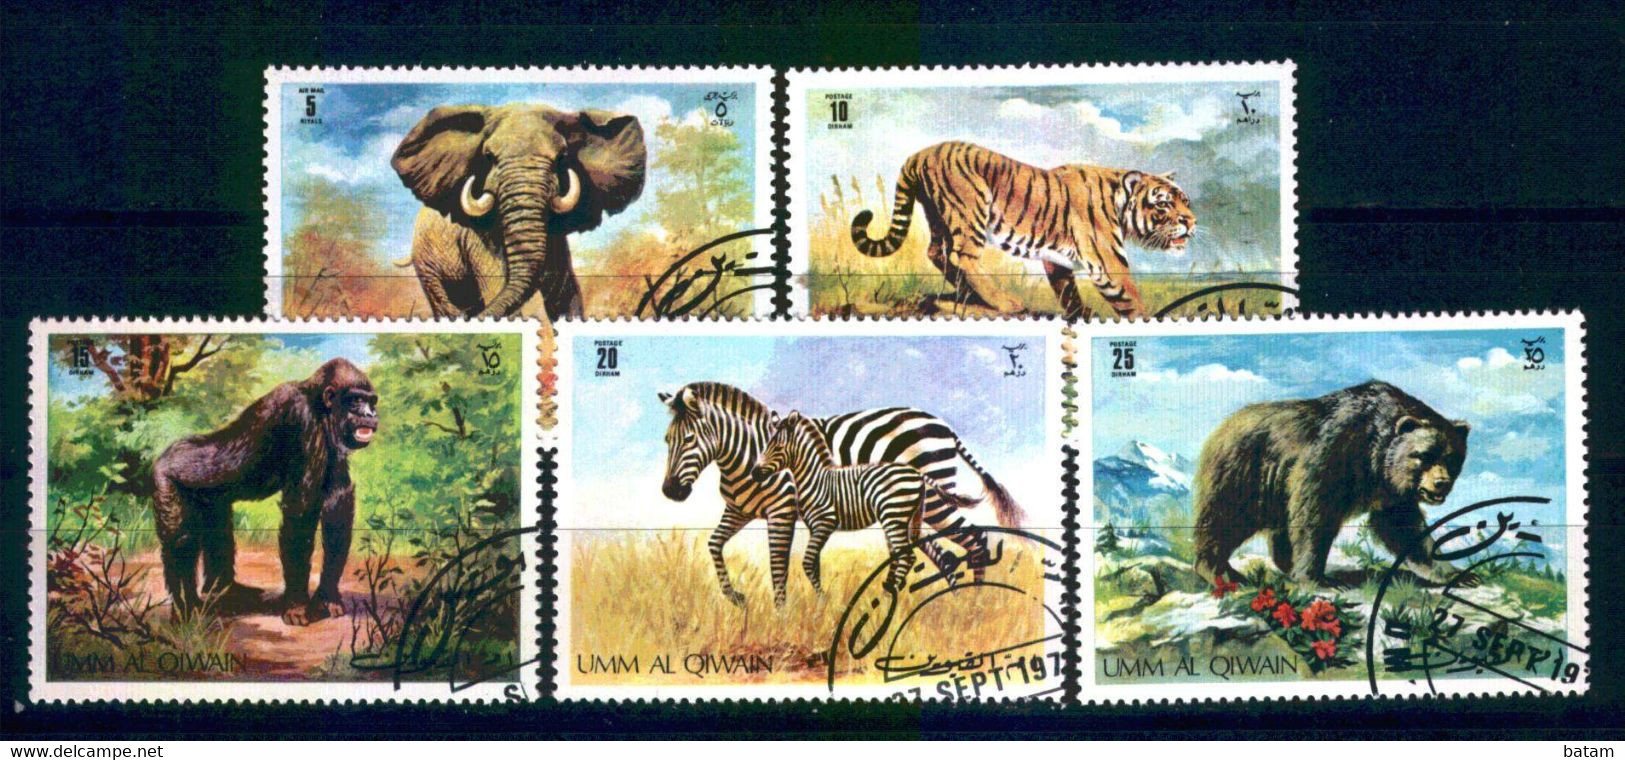 213 - Umm Al Qiwain - Bear - Elephants - Monkeys - Used Set - Elefanten